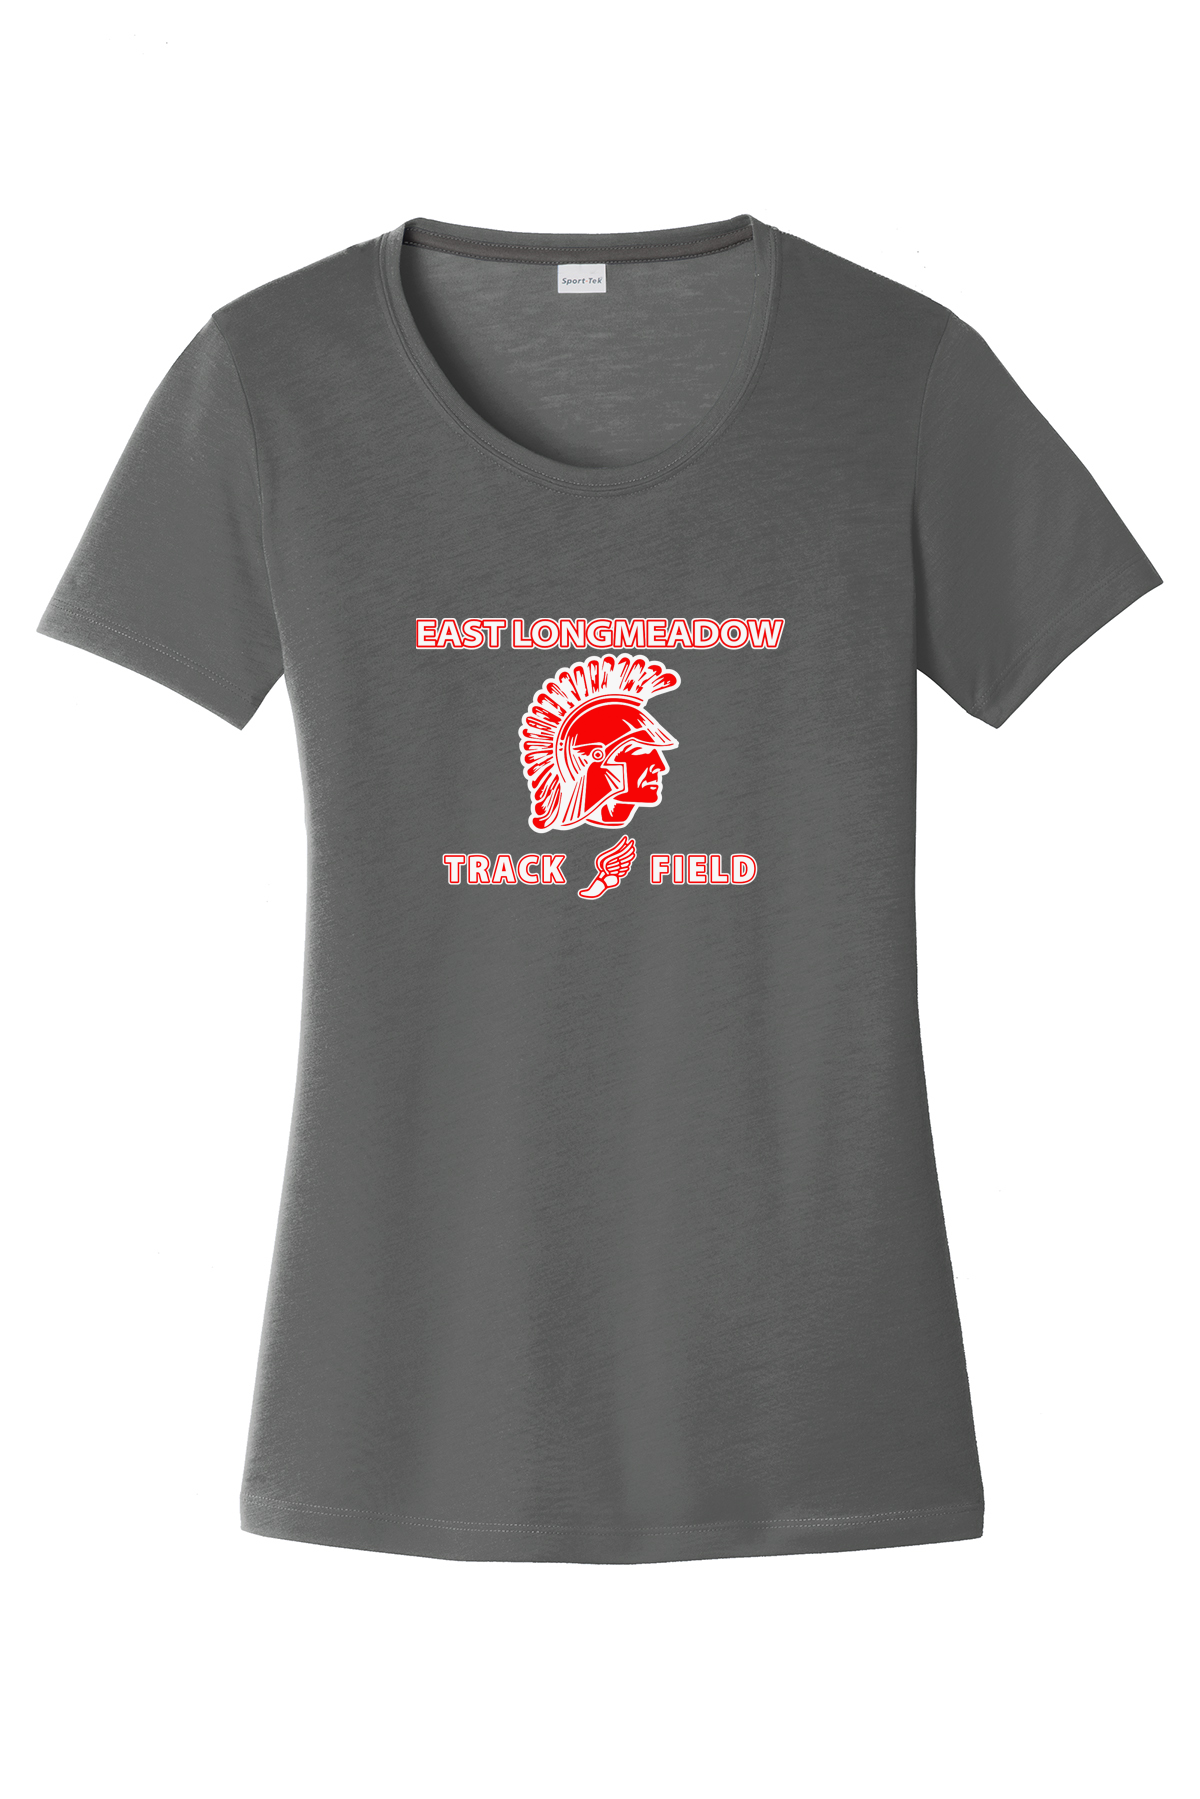 East Longmeadow Track and Field Women's Smoke Grey CottonTouch Performance T-Shirt